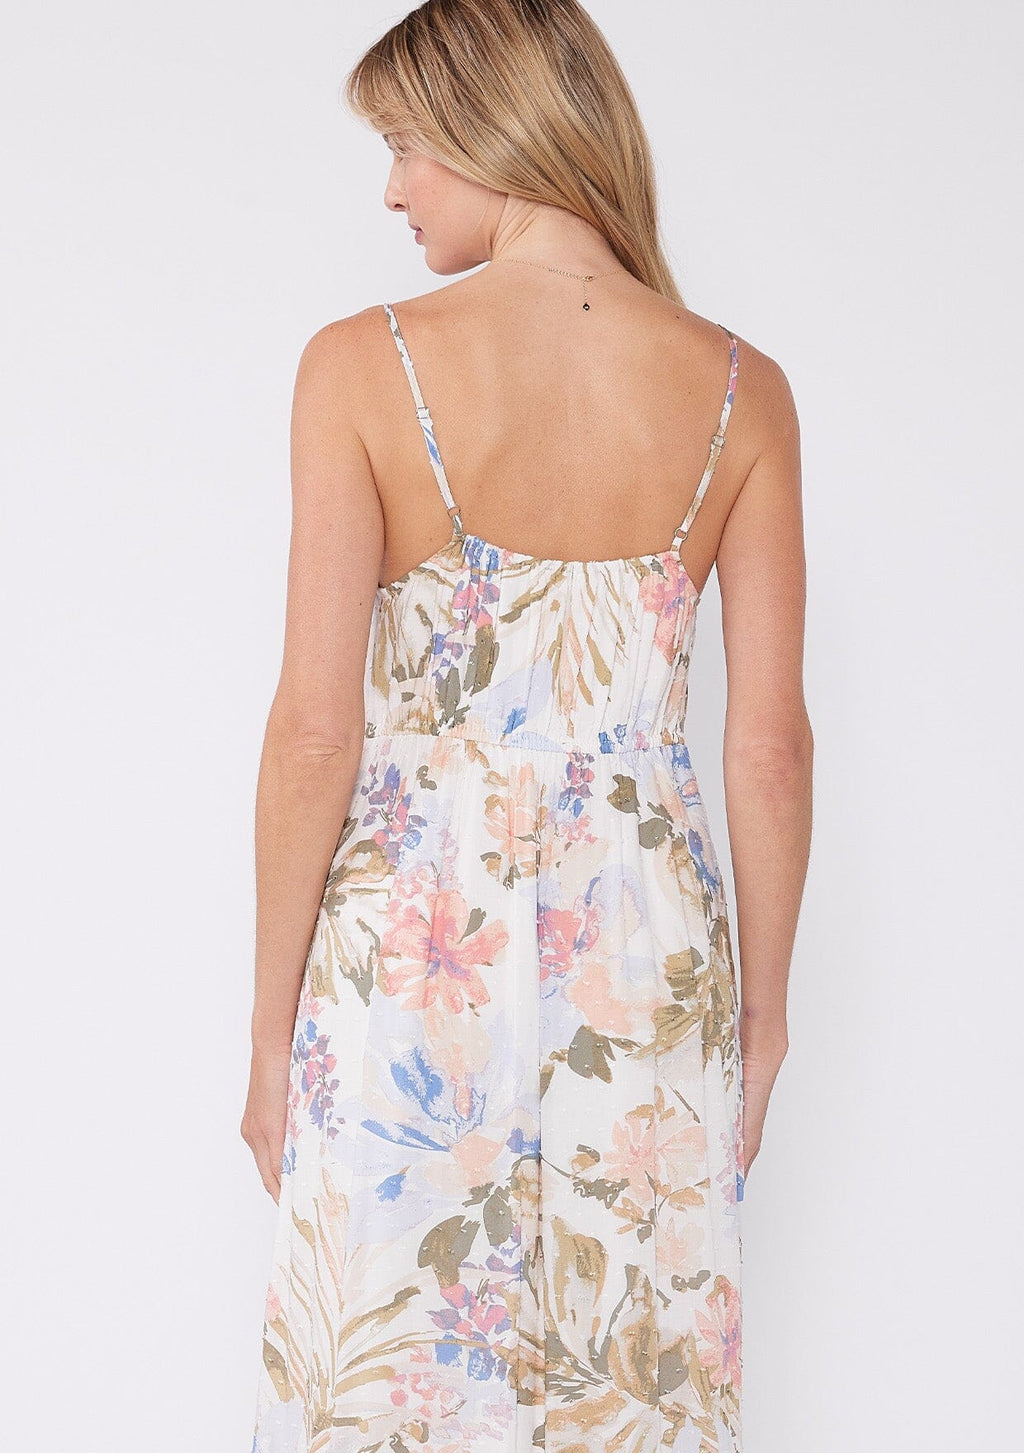 Women's Sleeveless White & Blue Floral Summer Dress | LOVESTITCH